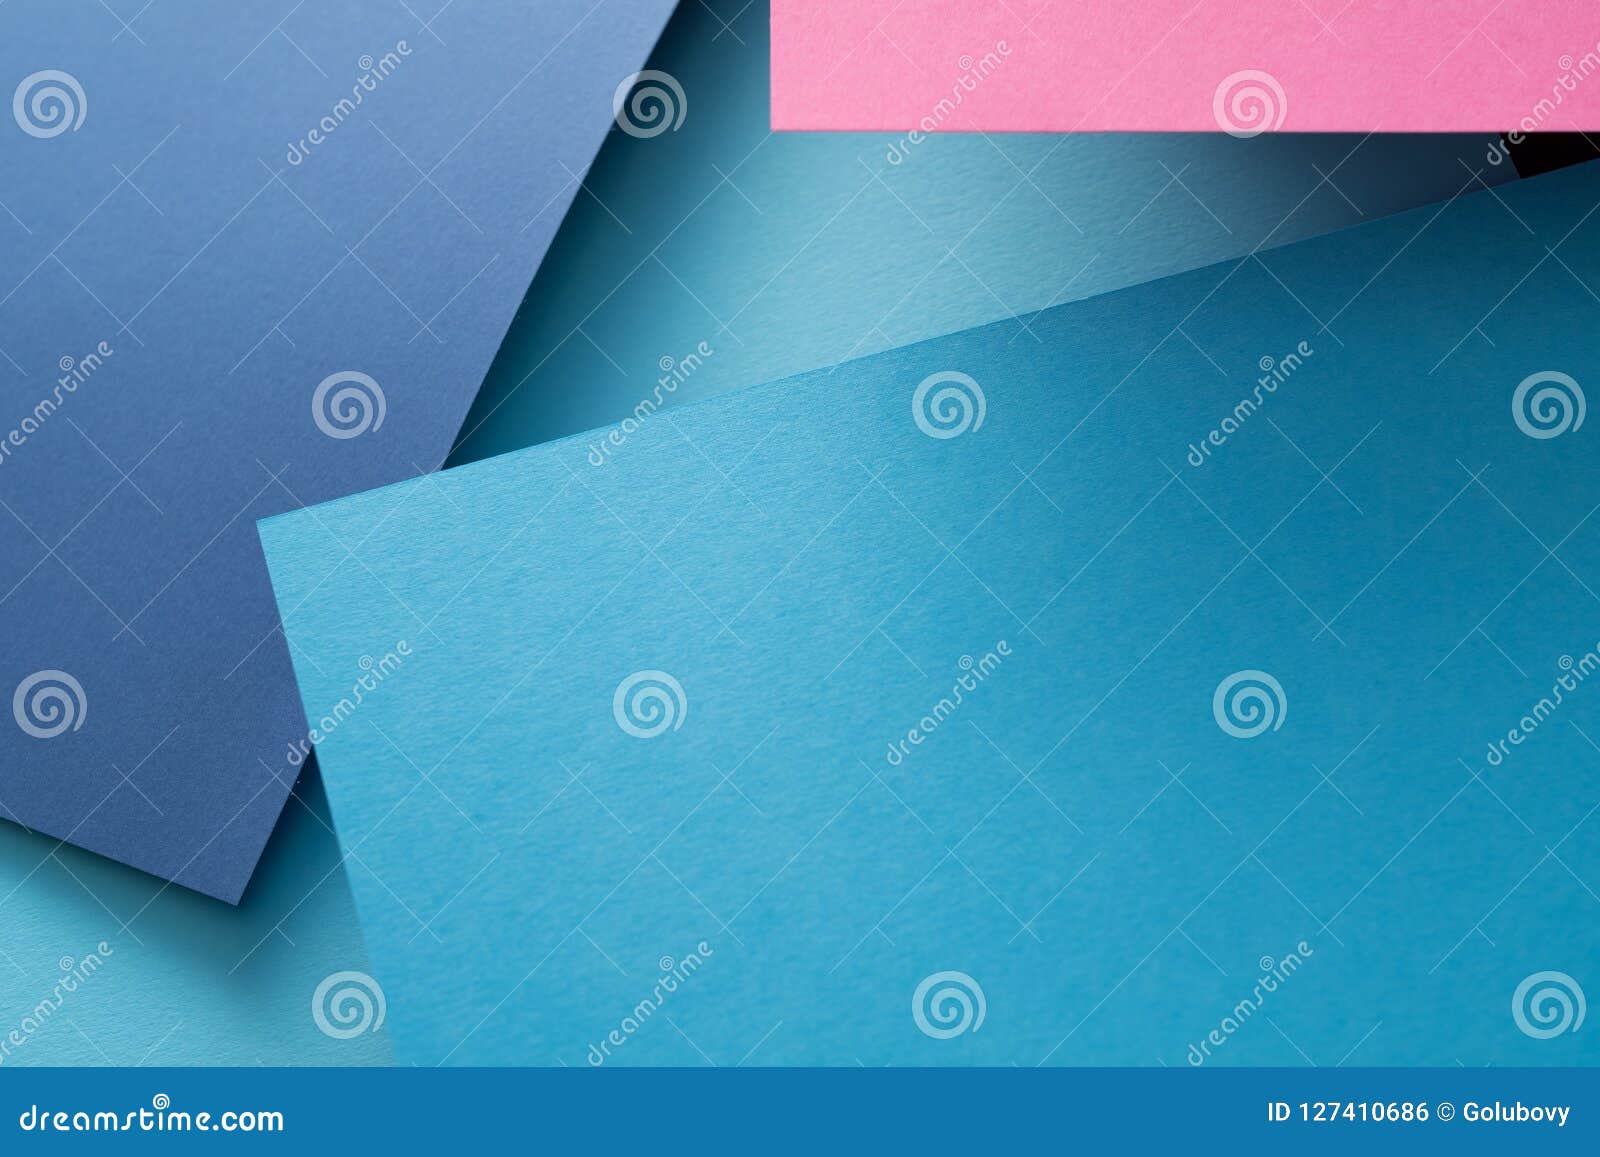 9,100 Blue Construction Paper Texture Stock Photos - Free